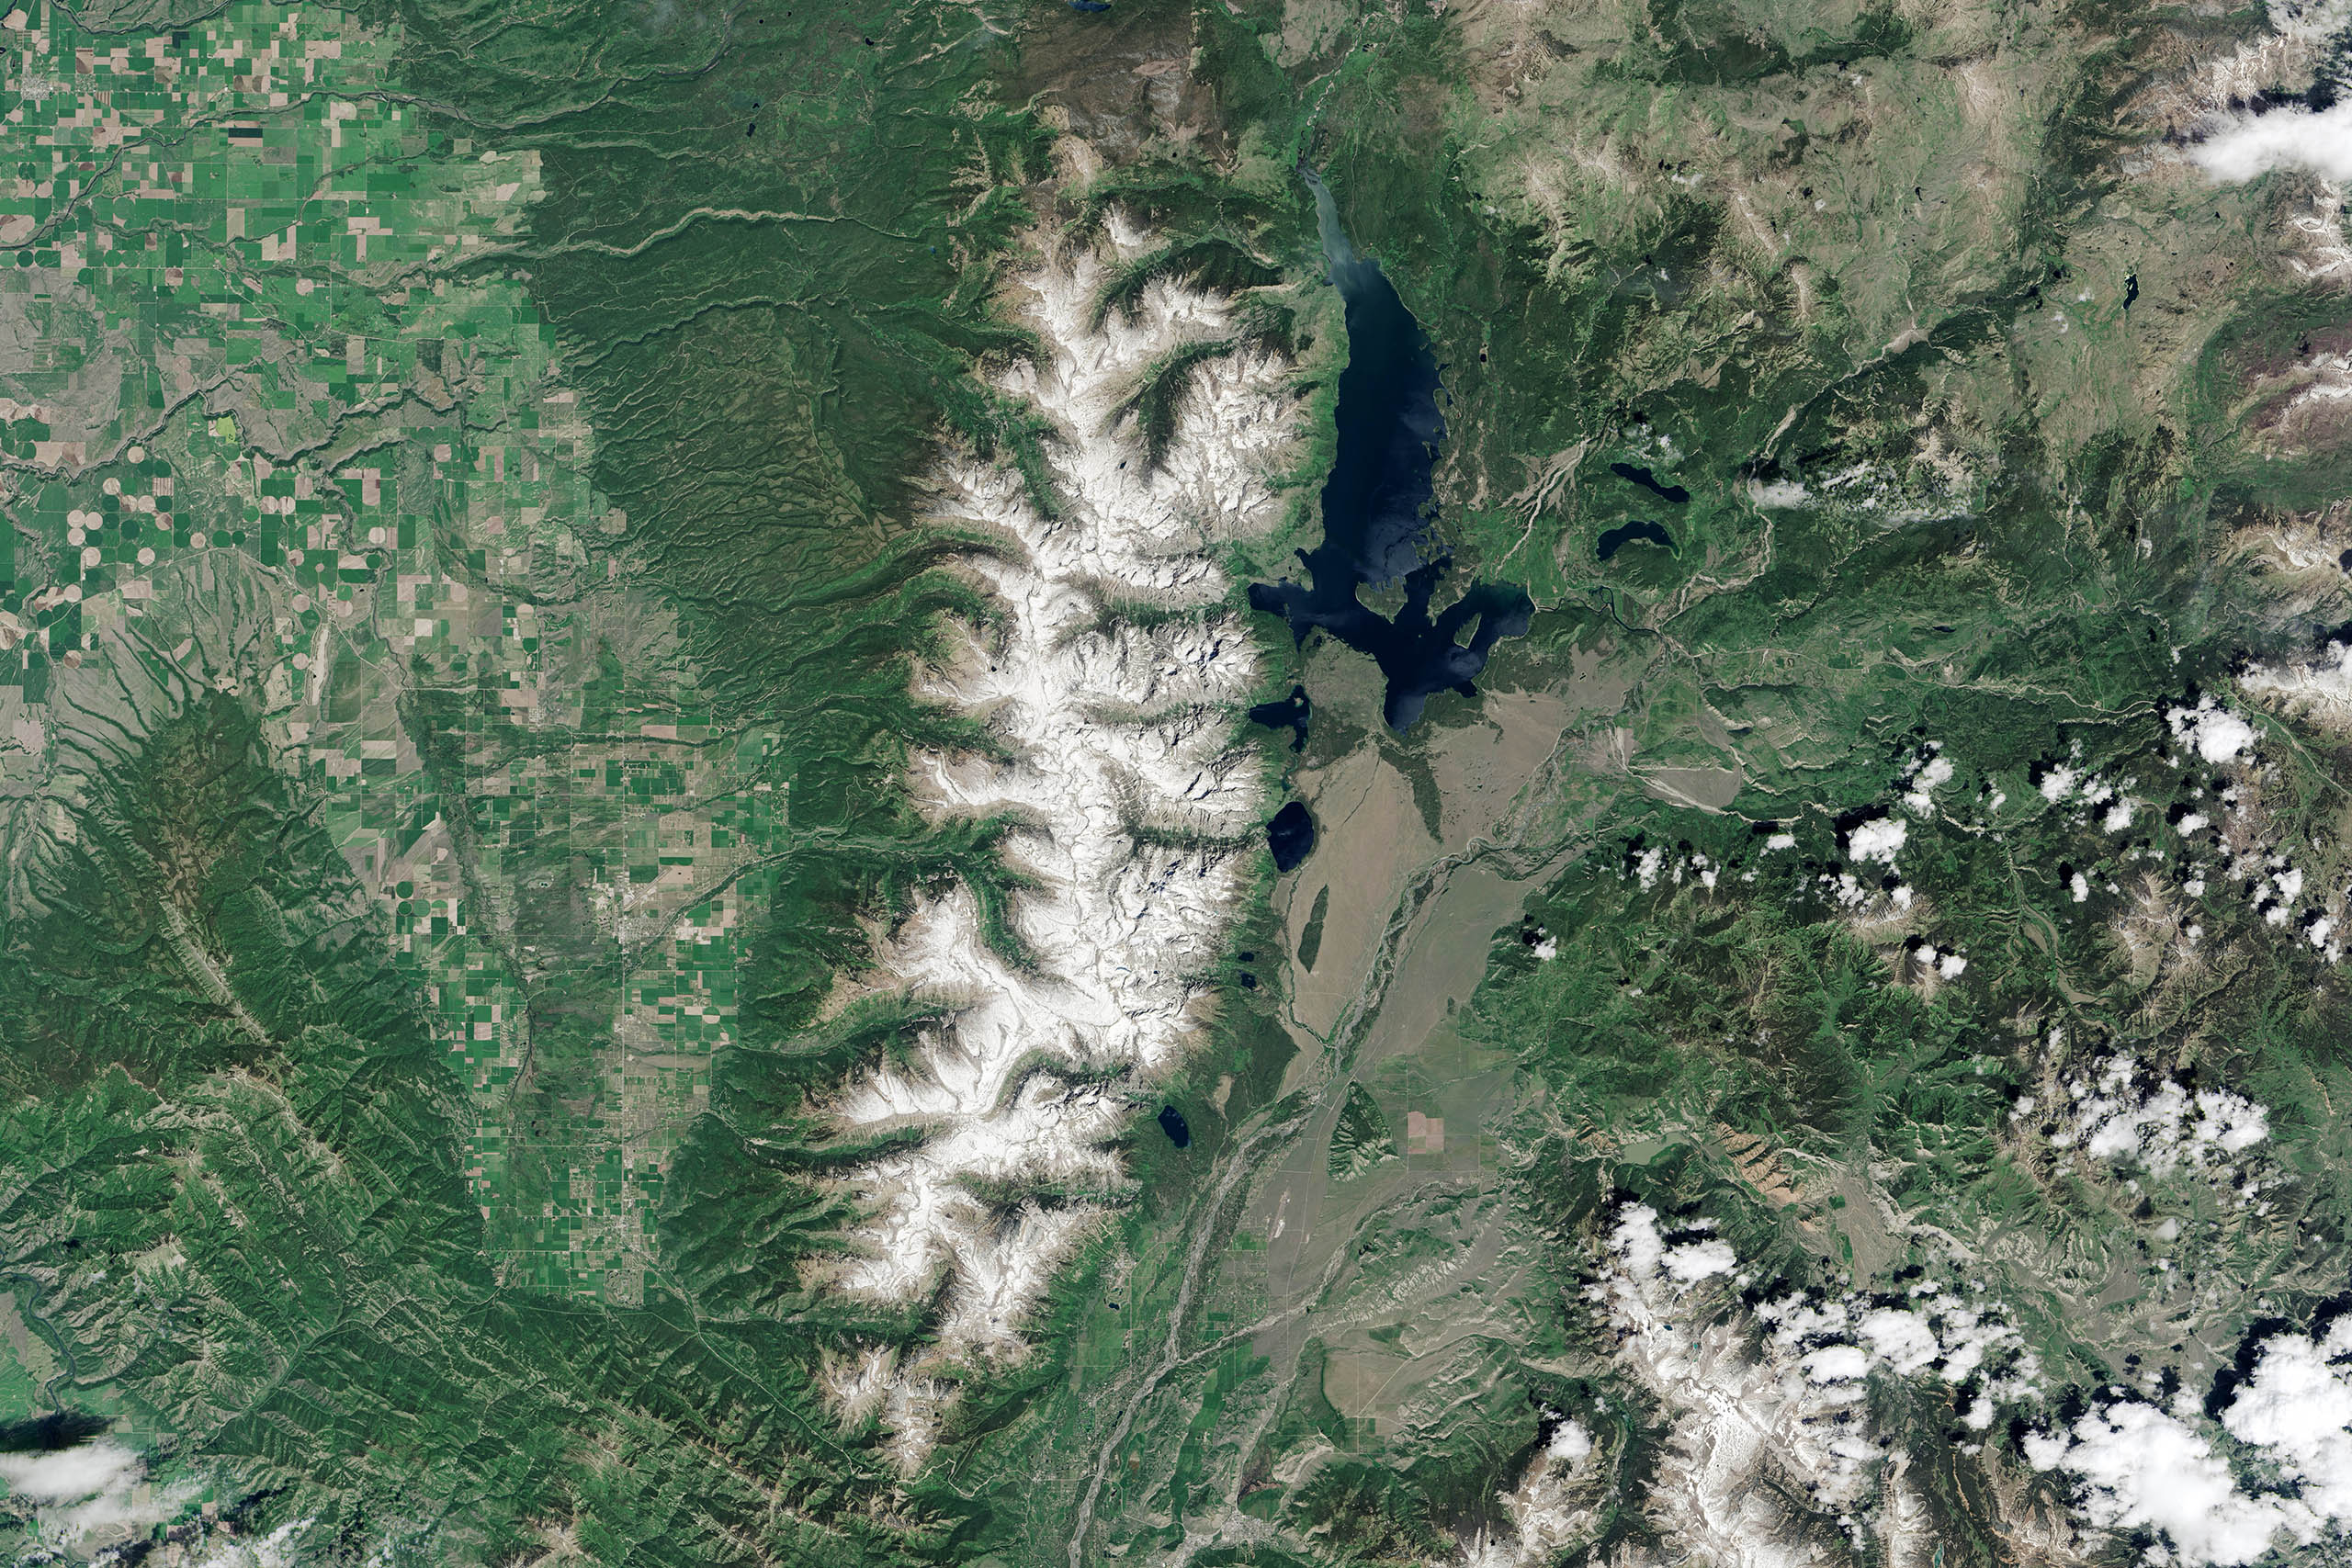 Grand Teton National Park, June 15, 2015